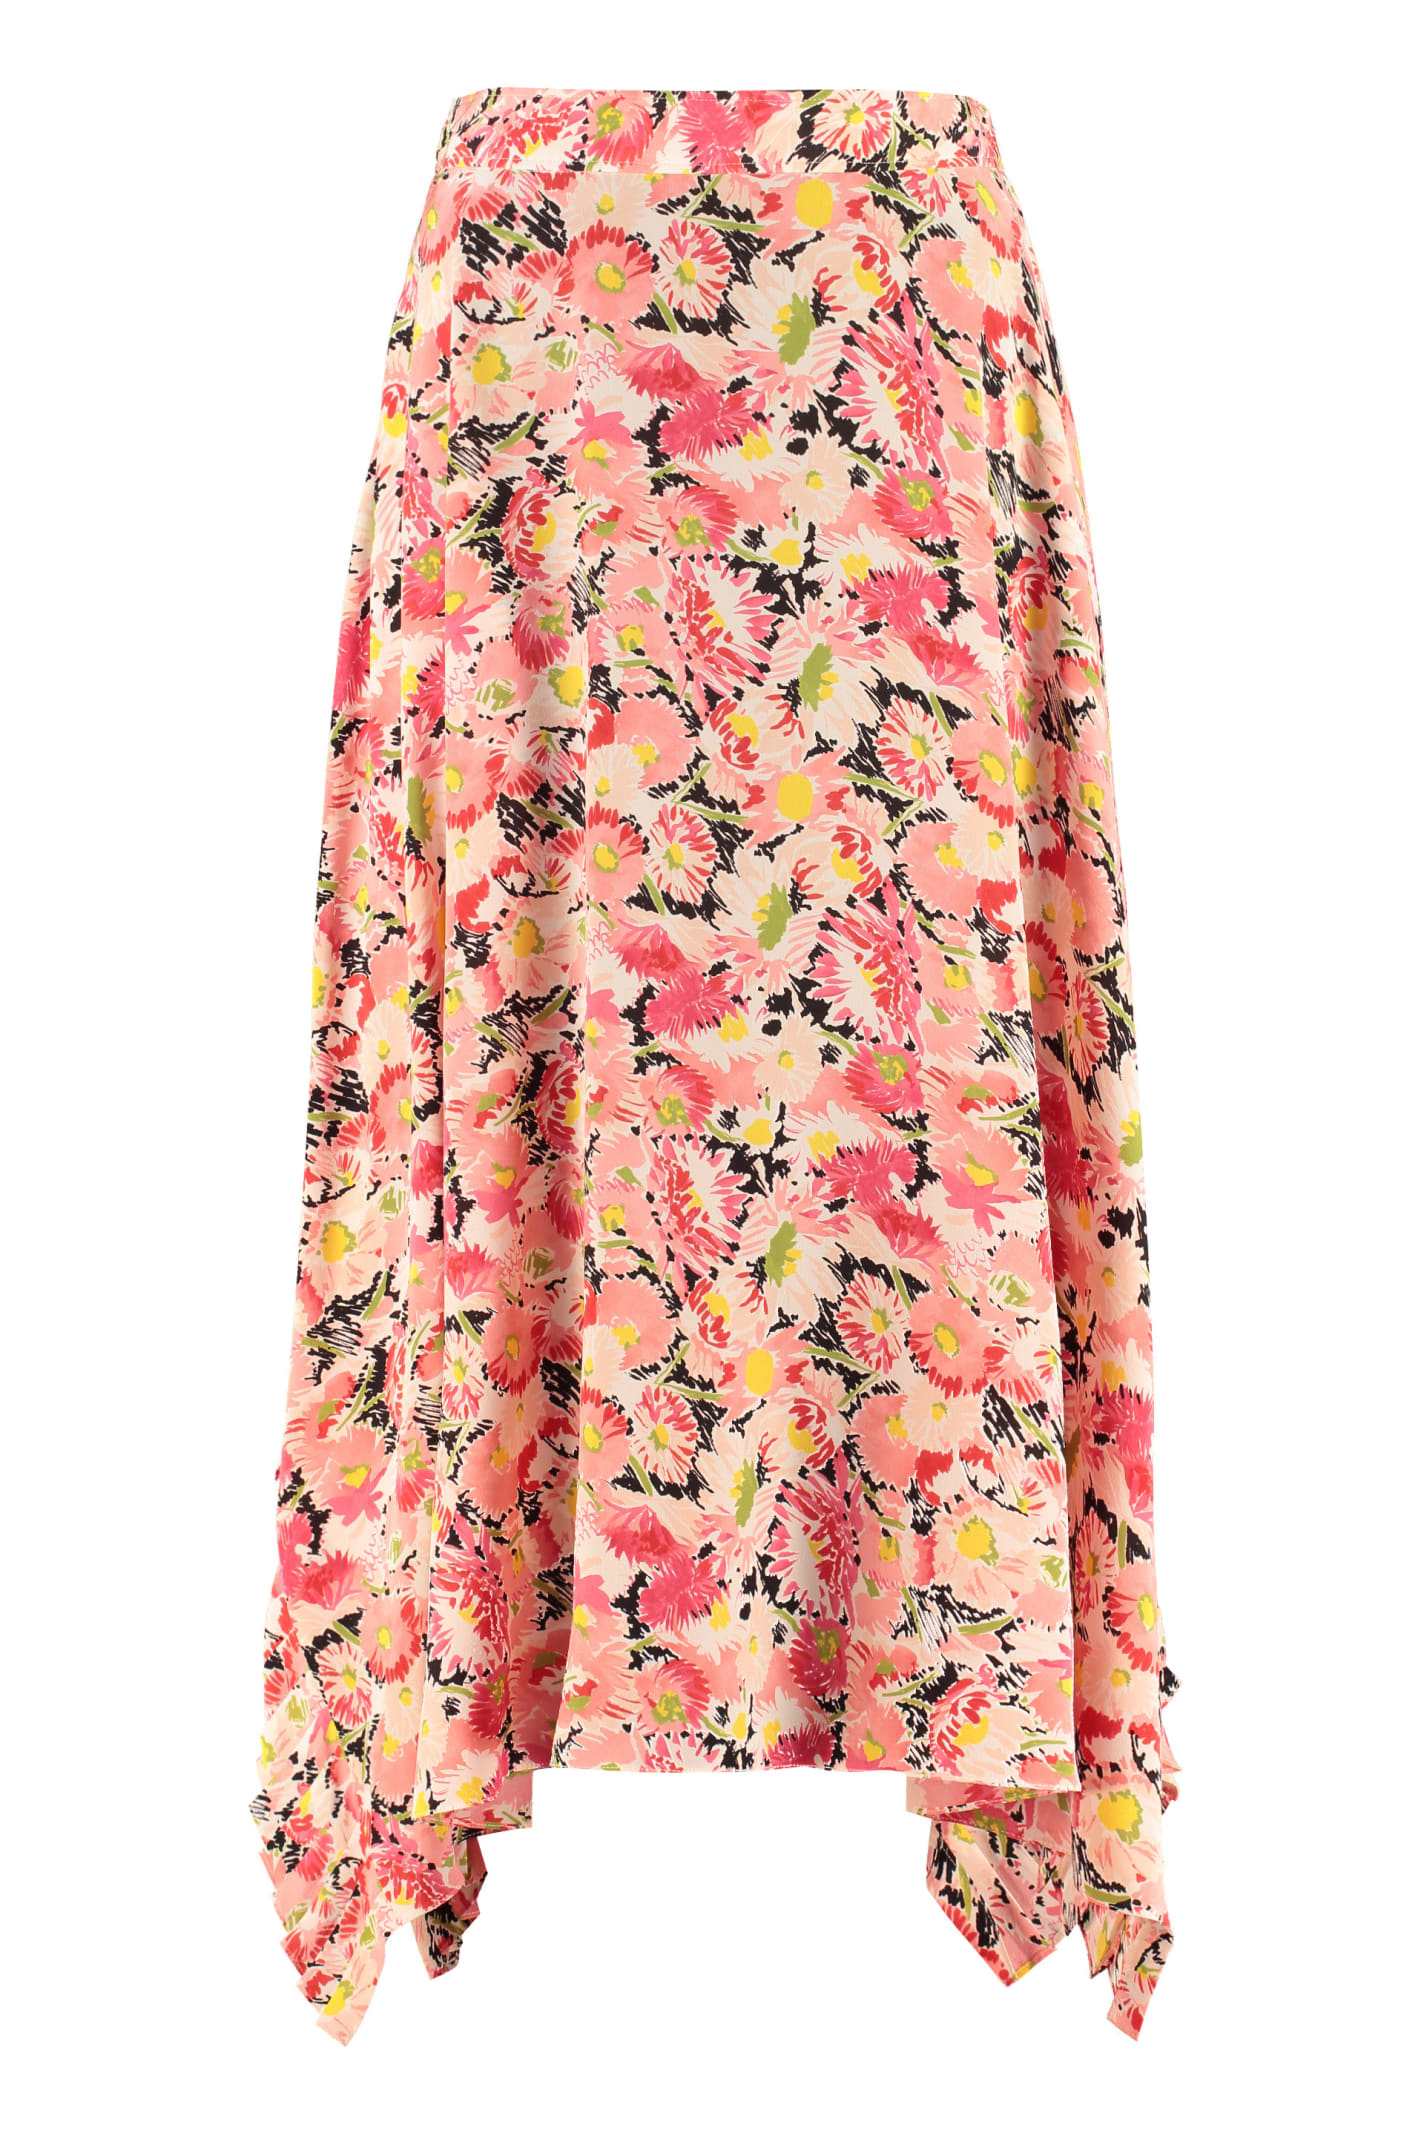 Stella McCartney Ashlyn Printed Silk Skirt